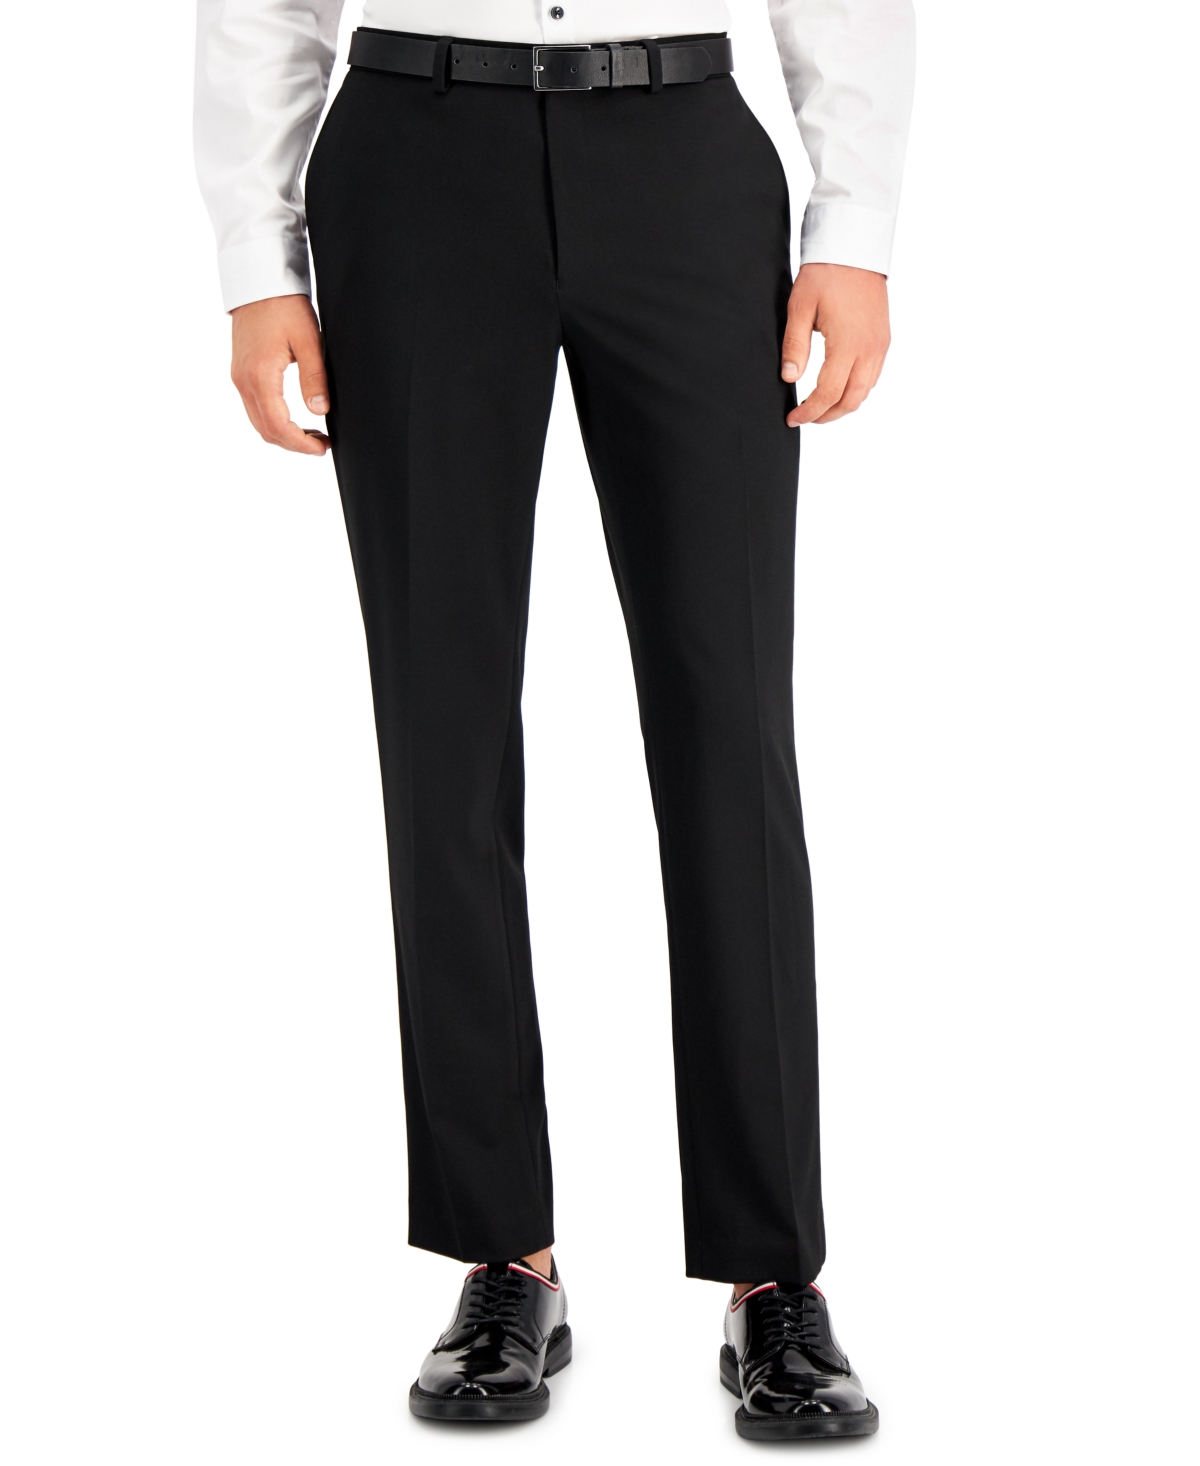 Men's Slim-Fit Black Solid Suit Pants, Created for Macy's - Deep Black